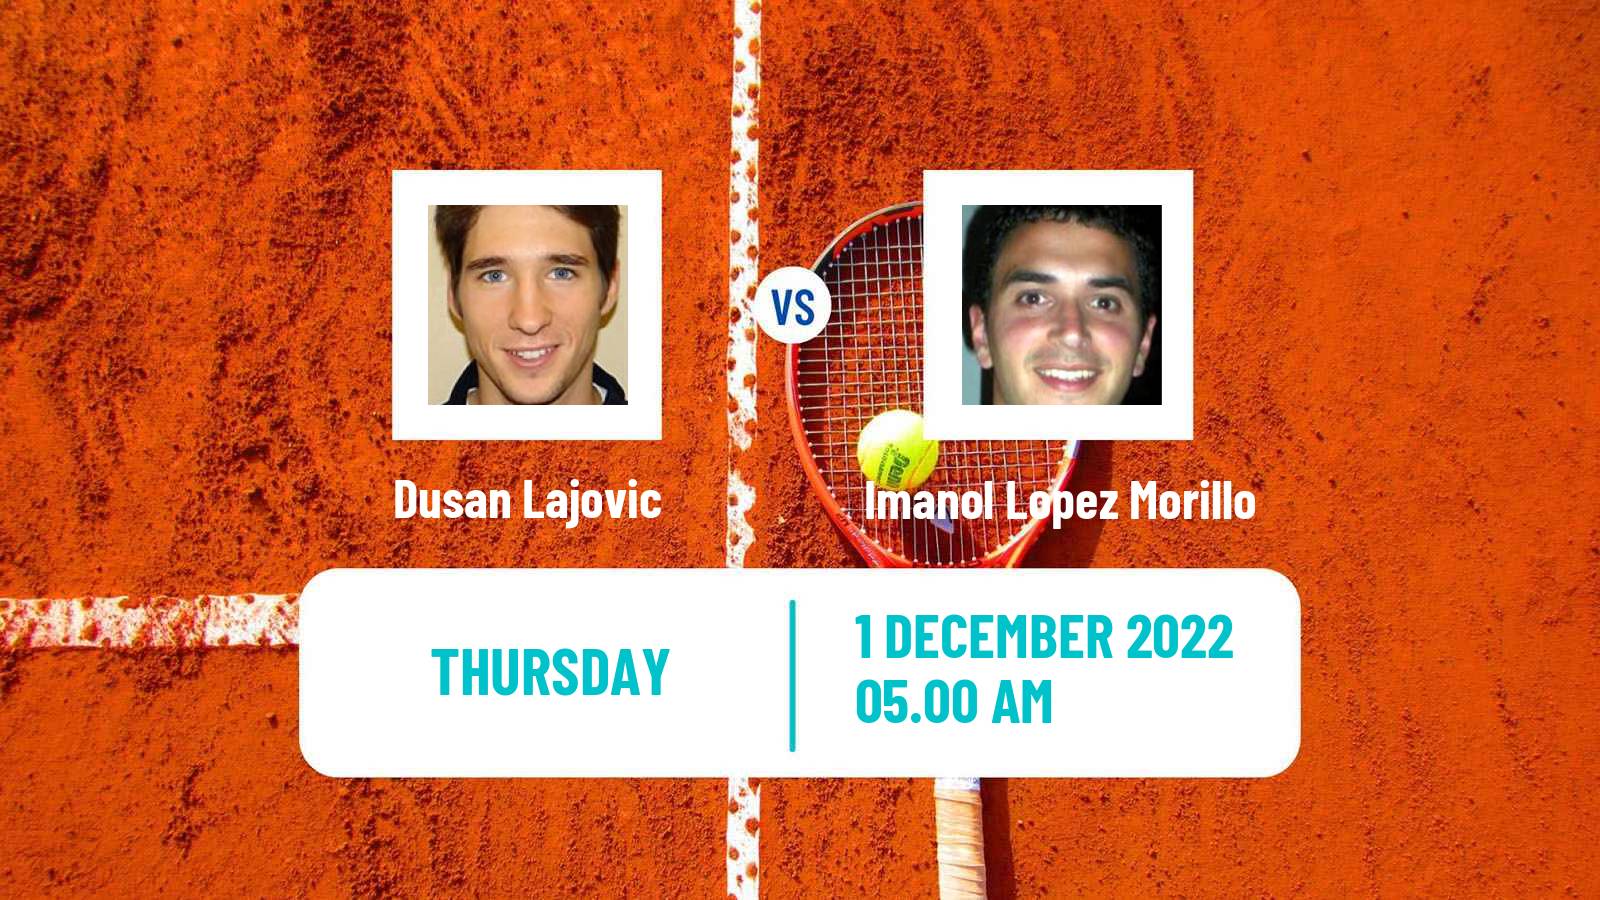 Tennis ATP Challenger Dusan Lajovic - Imanol Lopez Morillo